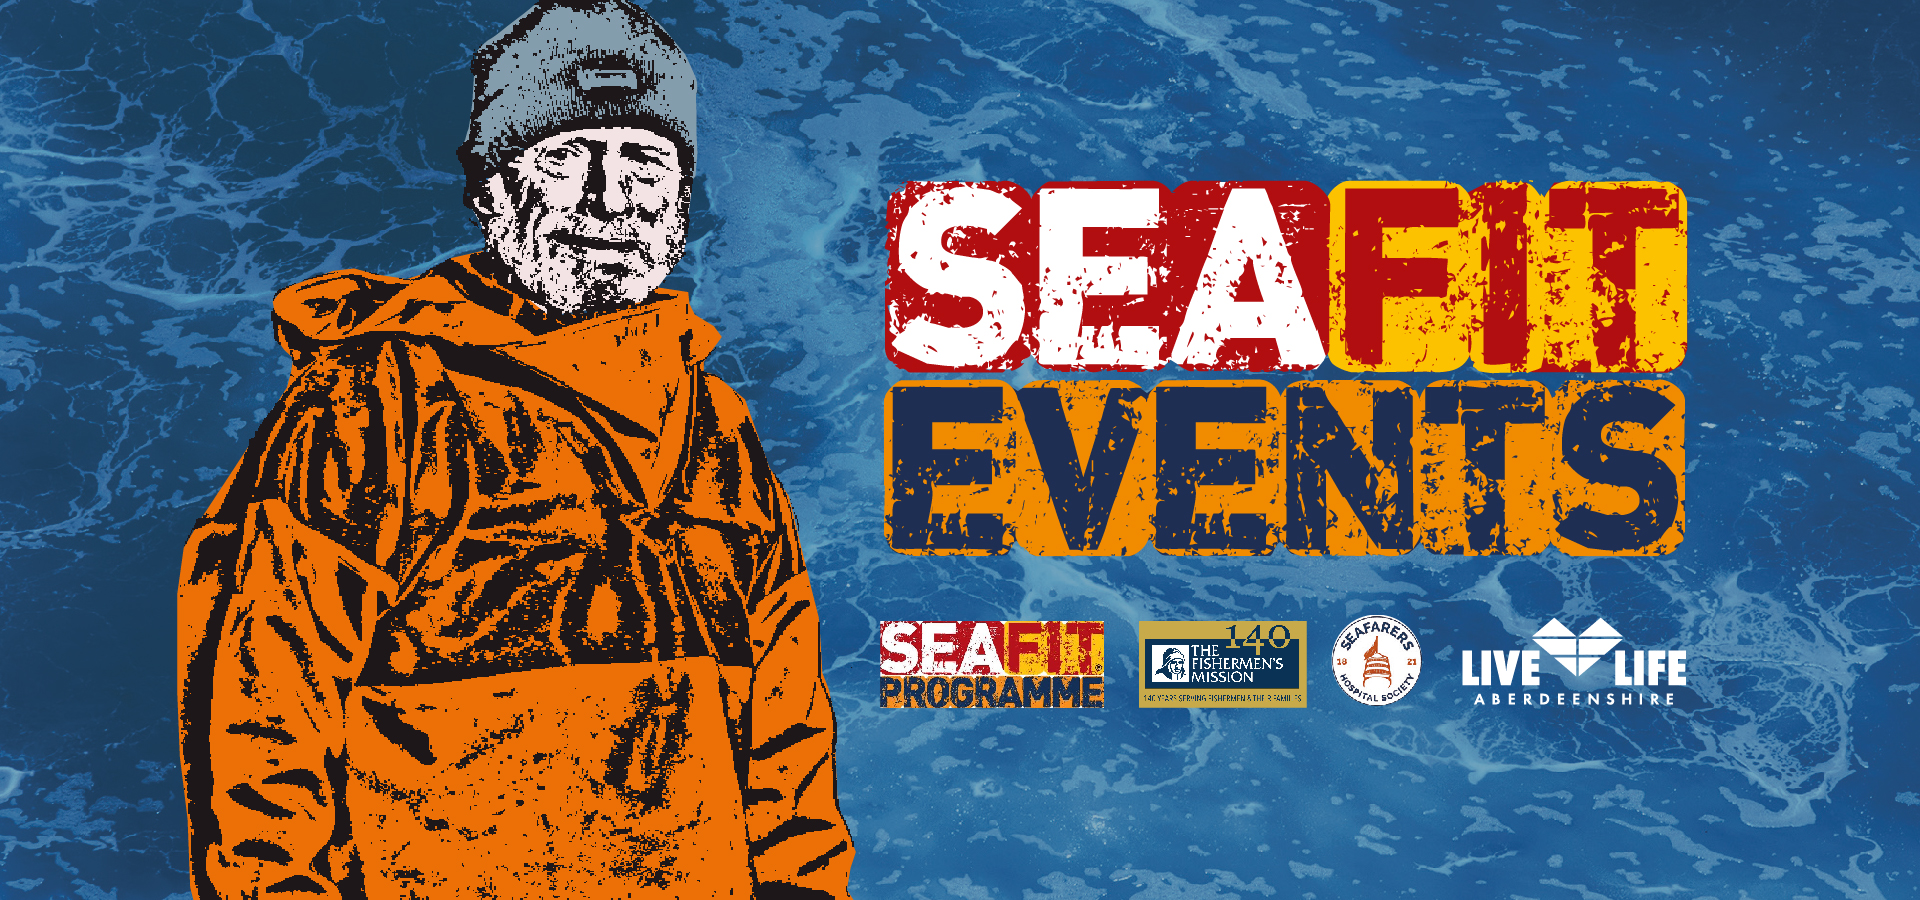 Image reads "Seafit Events". 